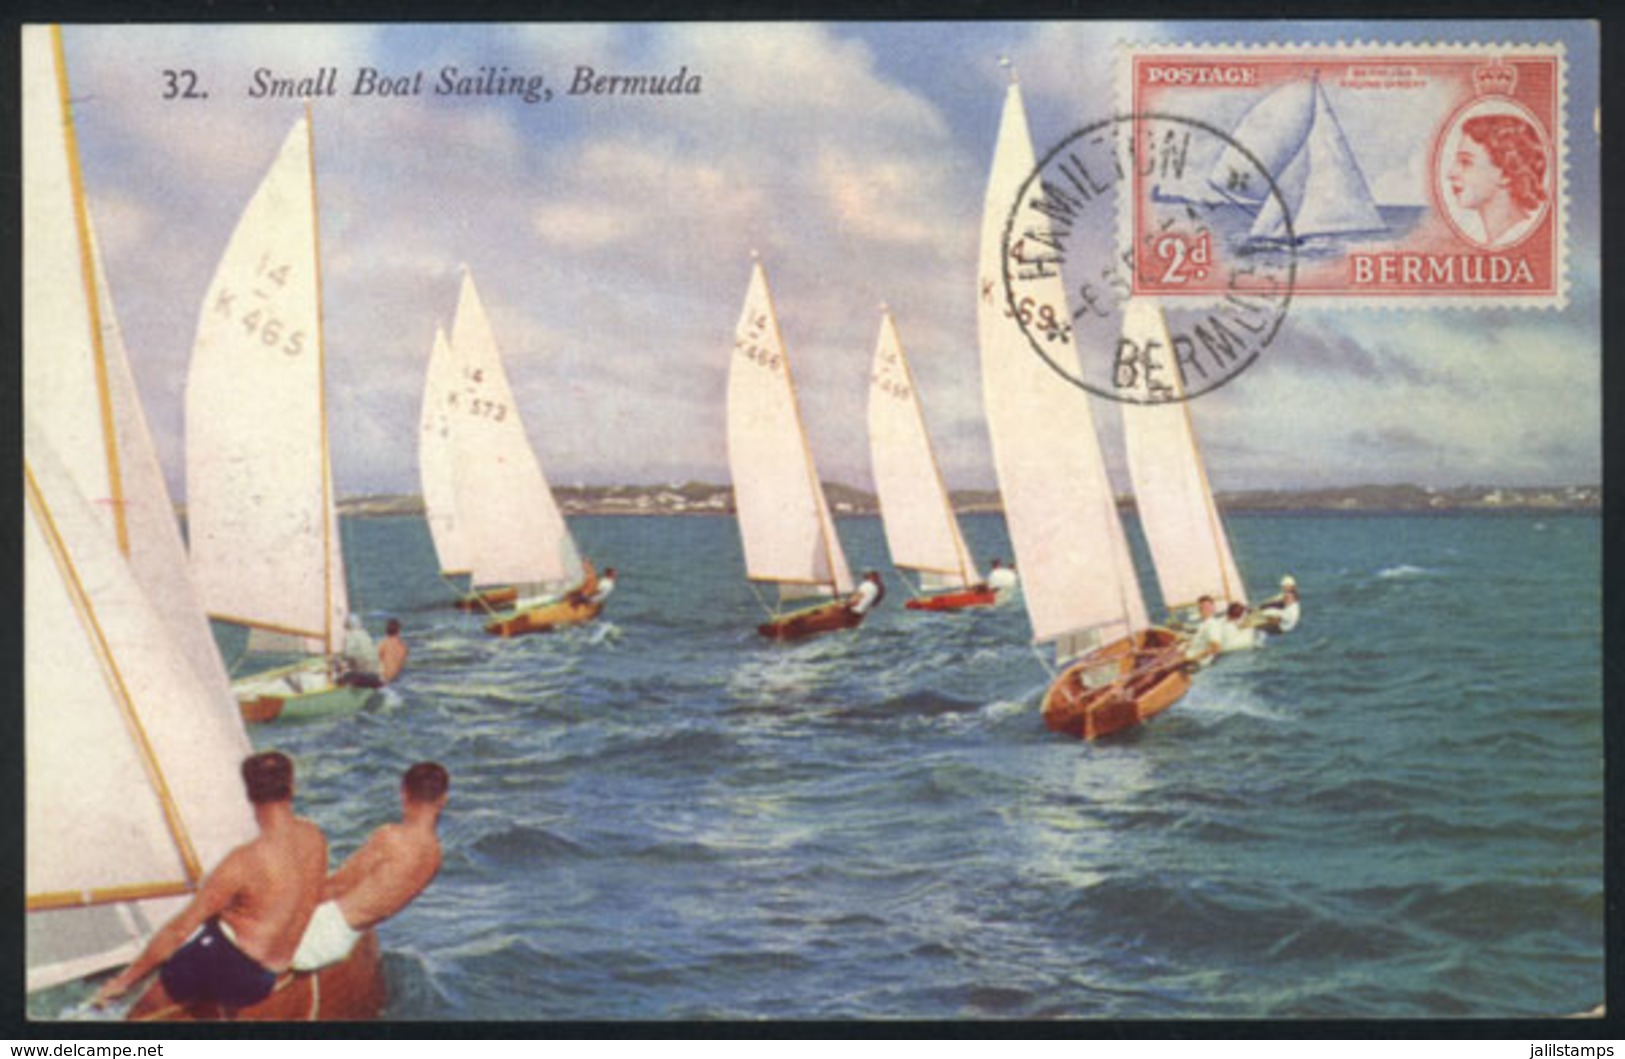 BERMUDA: Small Boat Sailing, Racing Dinghy, Maximum Card Of 1955, VF Quality - Bermuda